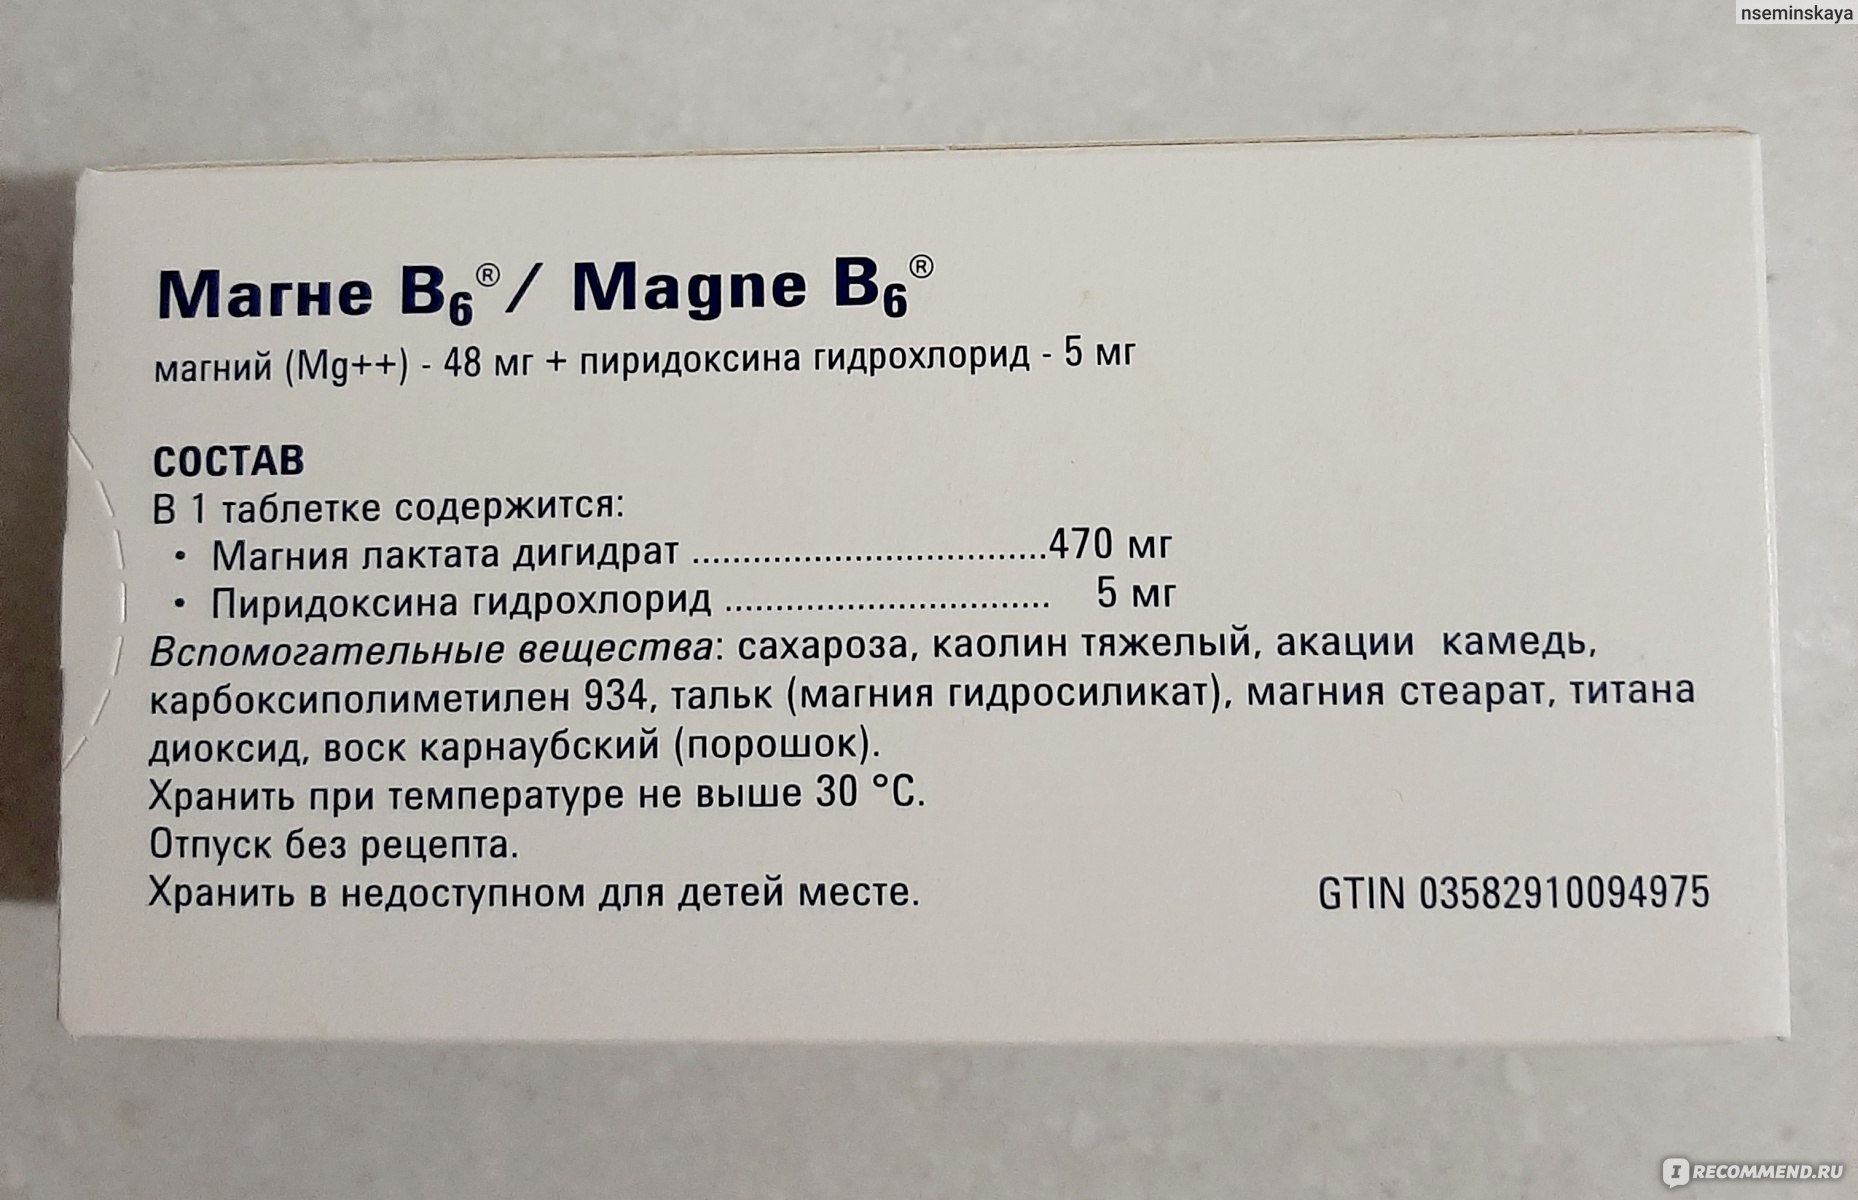 Магний б6 как пить взрослым. Магний б6 пиридоксина гидрохлорид. Магне в6 магний пиридоксина гидрохлорид. Магний б6 (магний лактат+пиридоксина гидрохлорид. Магния лактат 470 мг пиридоксина гидрохлорид 5 мг.